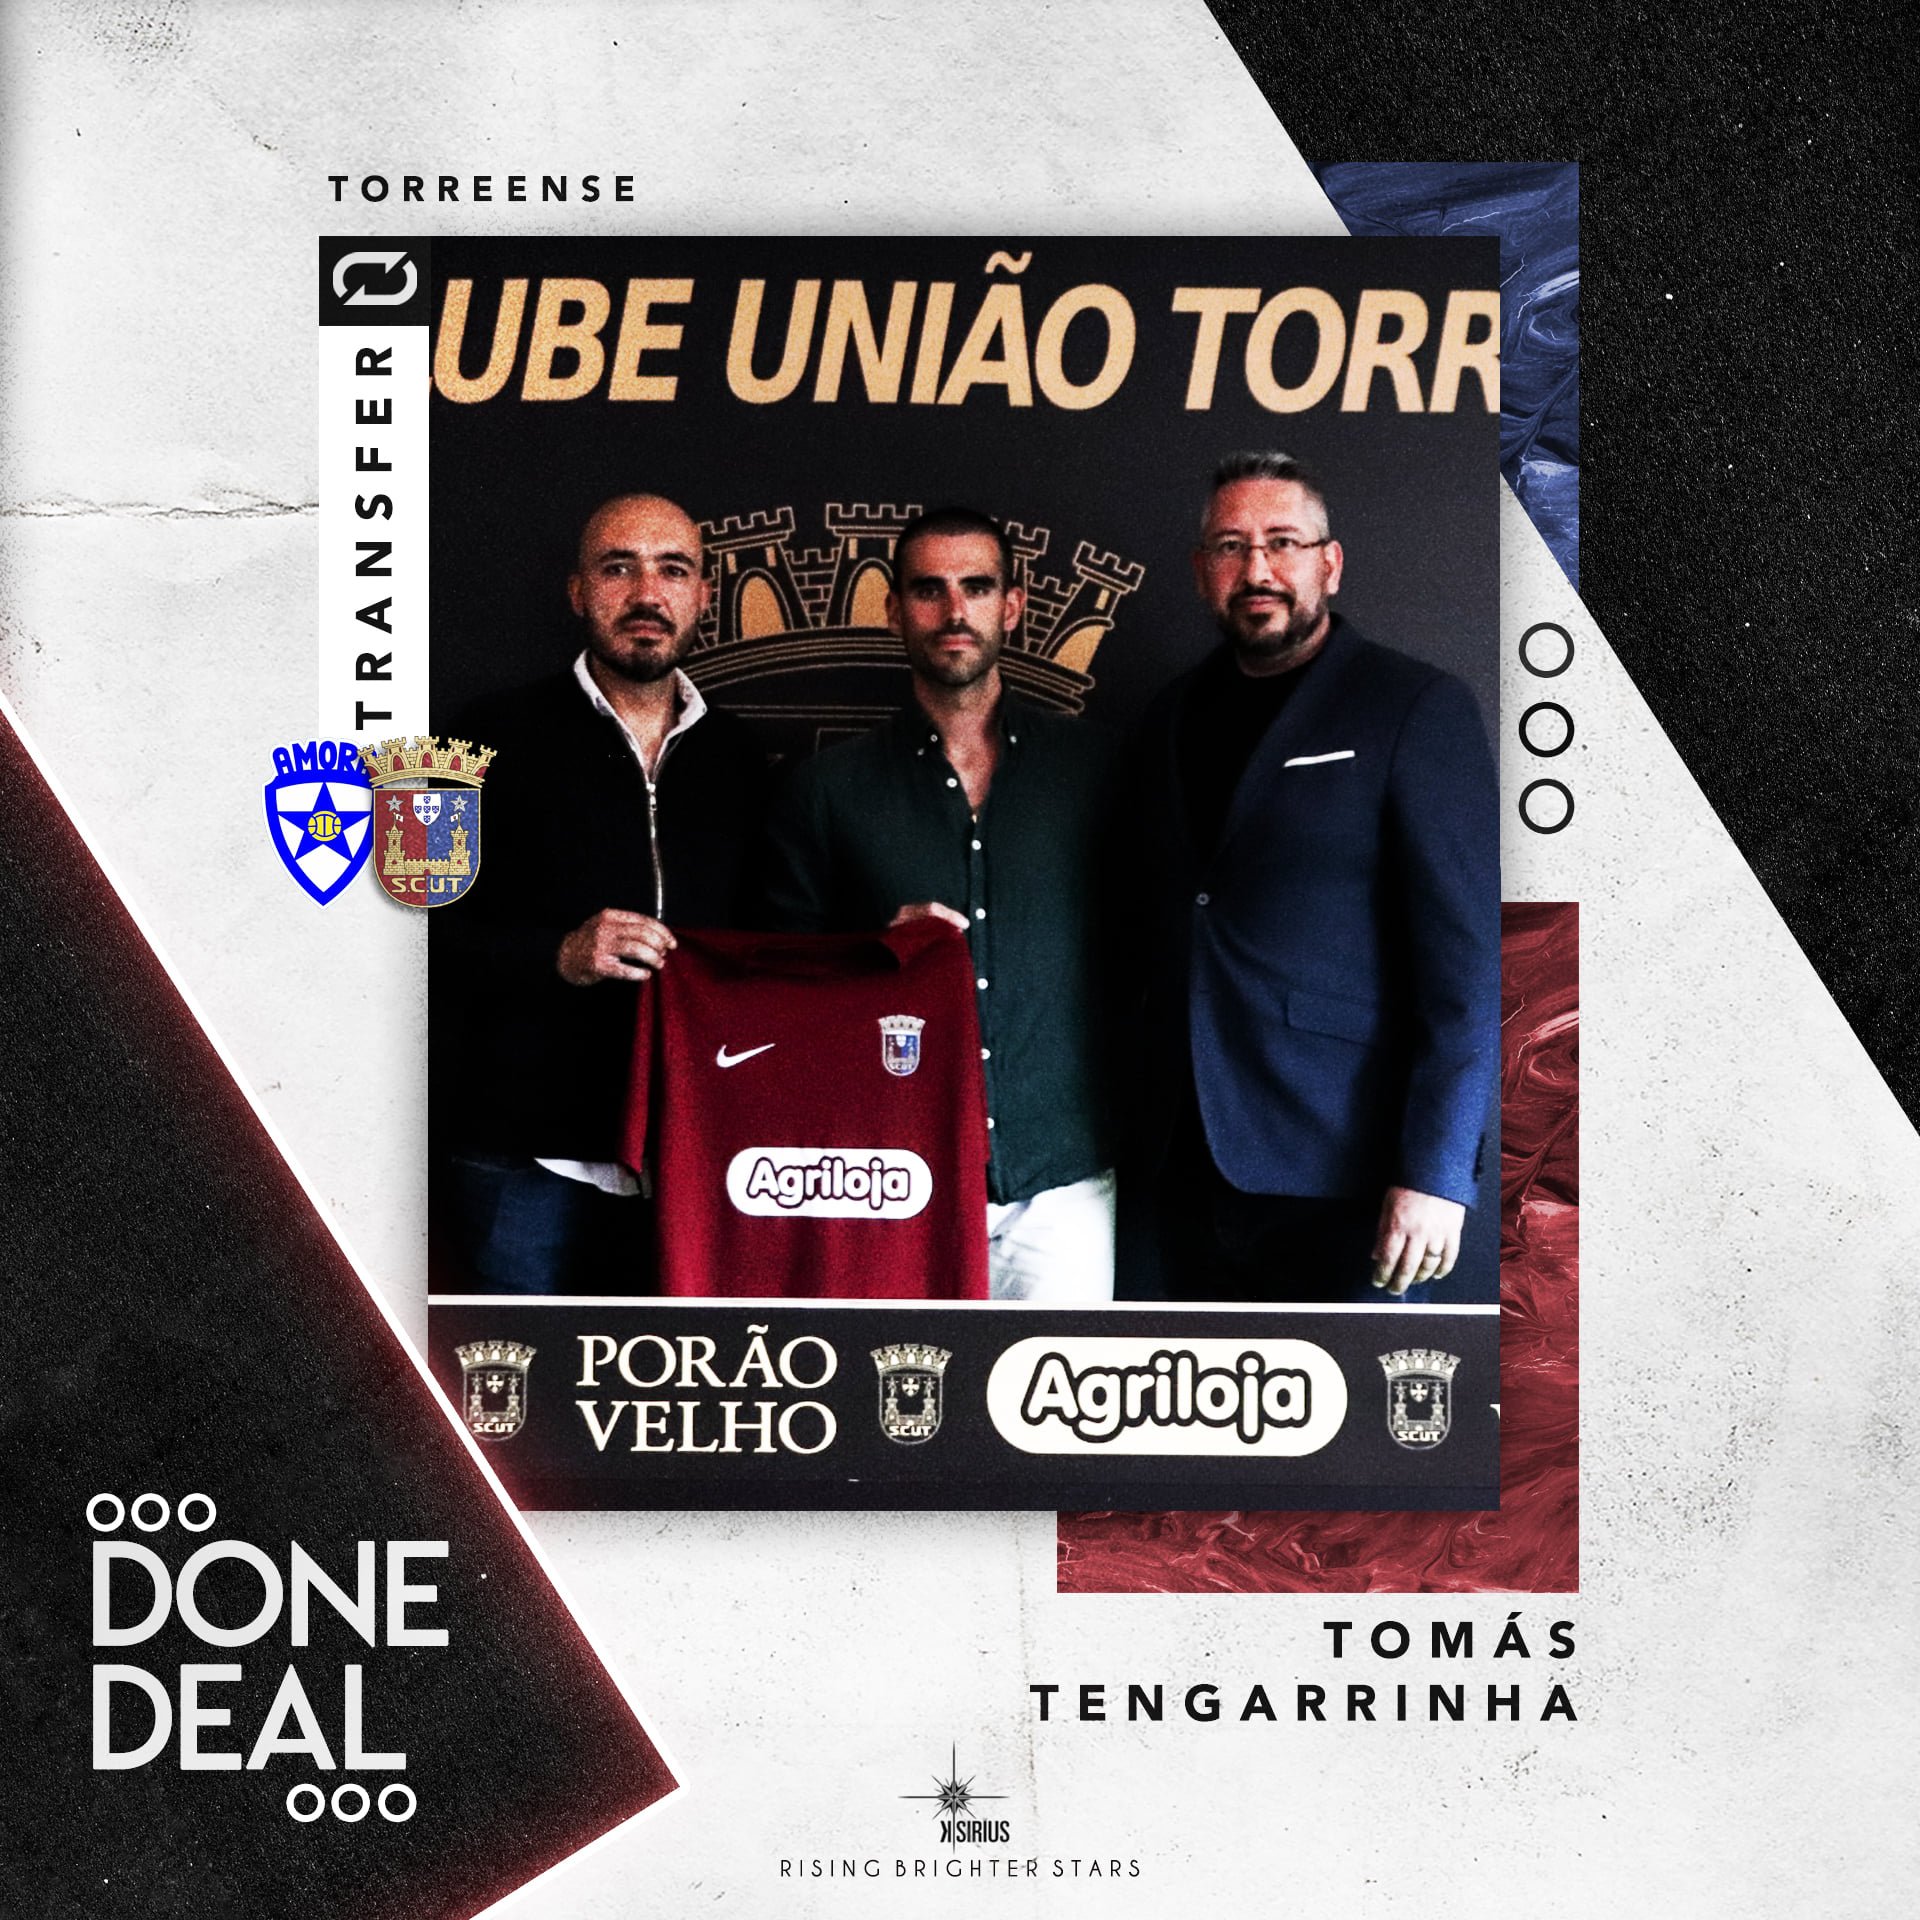 Signing: Tomás Tengarrinha whith S. C. União Torreense